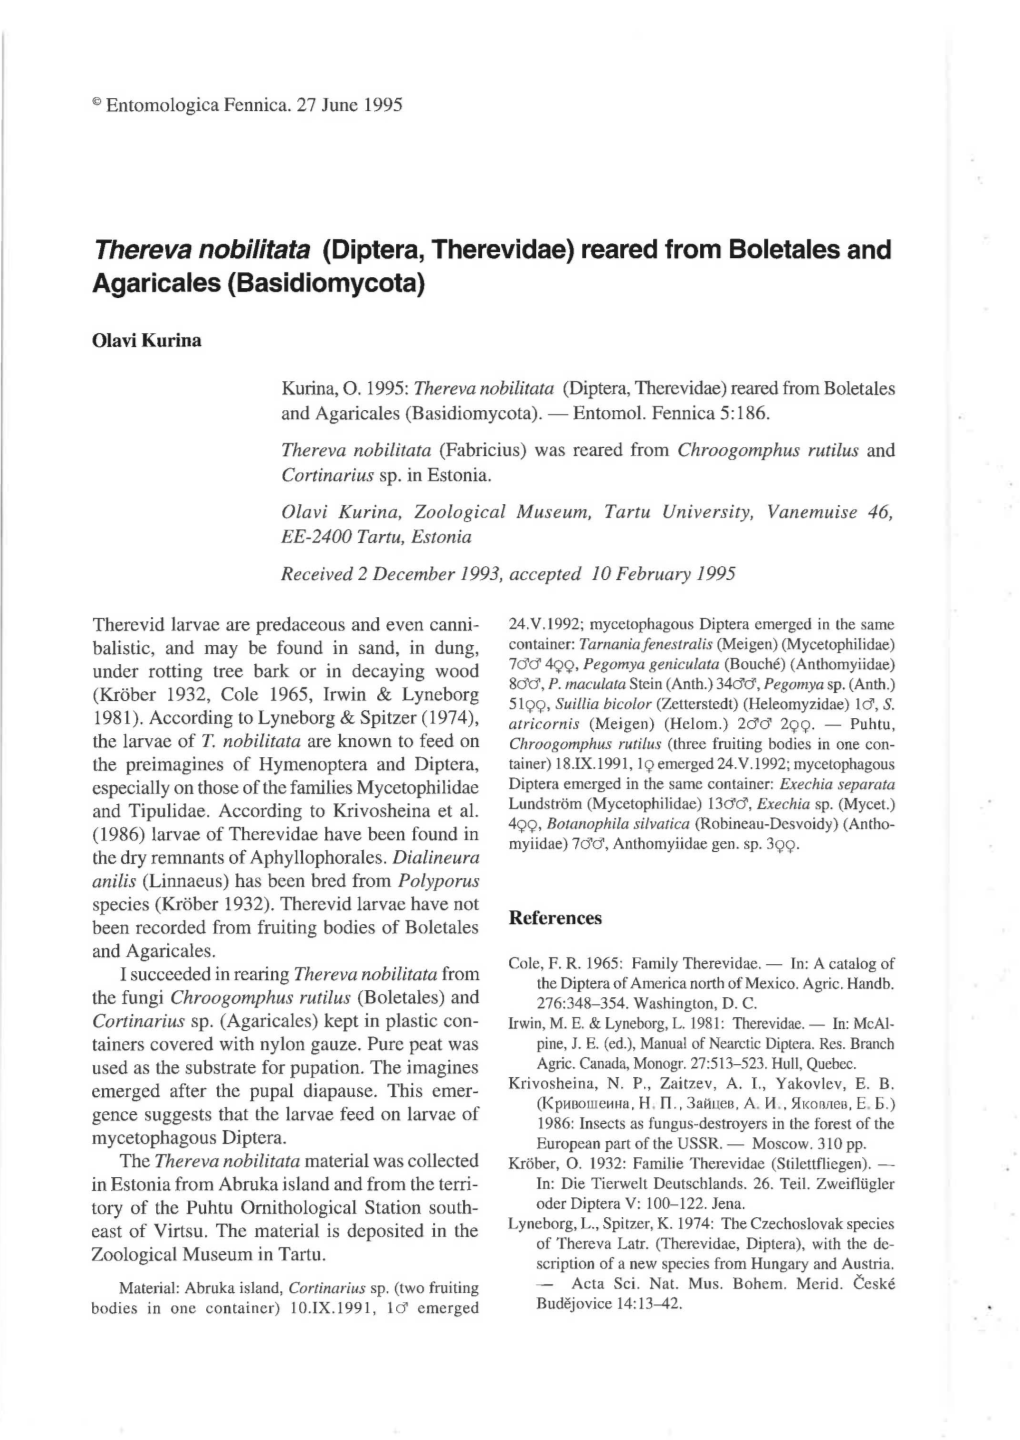 Thereva Nobilitata (Diptera, Therevidae) Reared from Boletales and Agaricales (Basidiomycota)